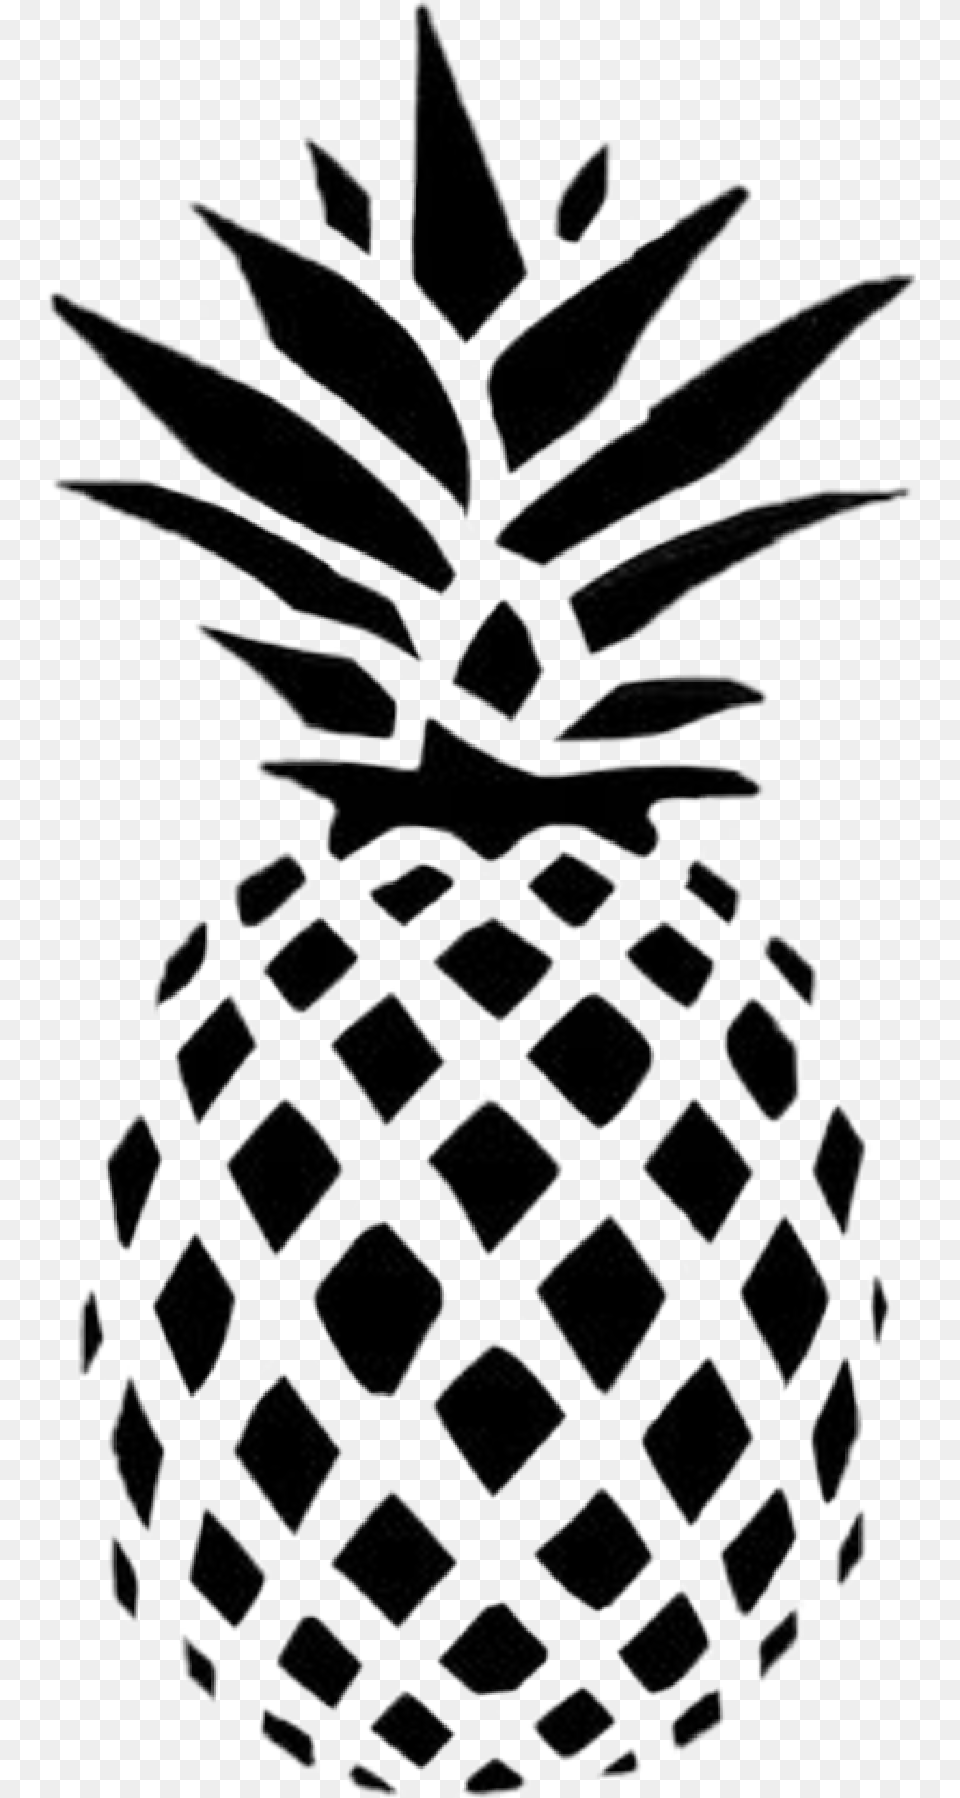 Pineappletumblrpineappletumblr Pumpkin Carving Stencils Pineapple, Food, Fruit, Plant, Produce Png Image